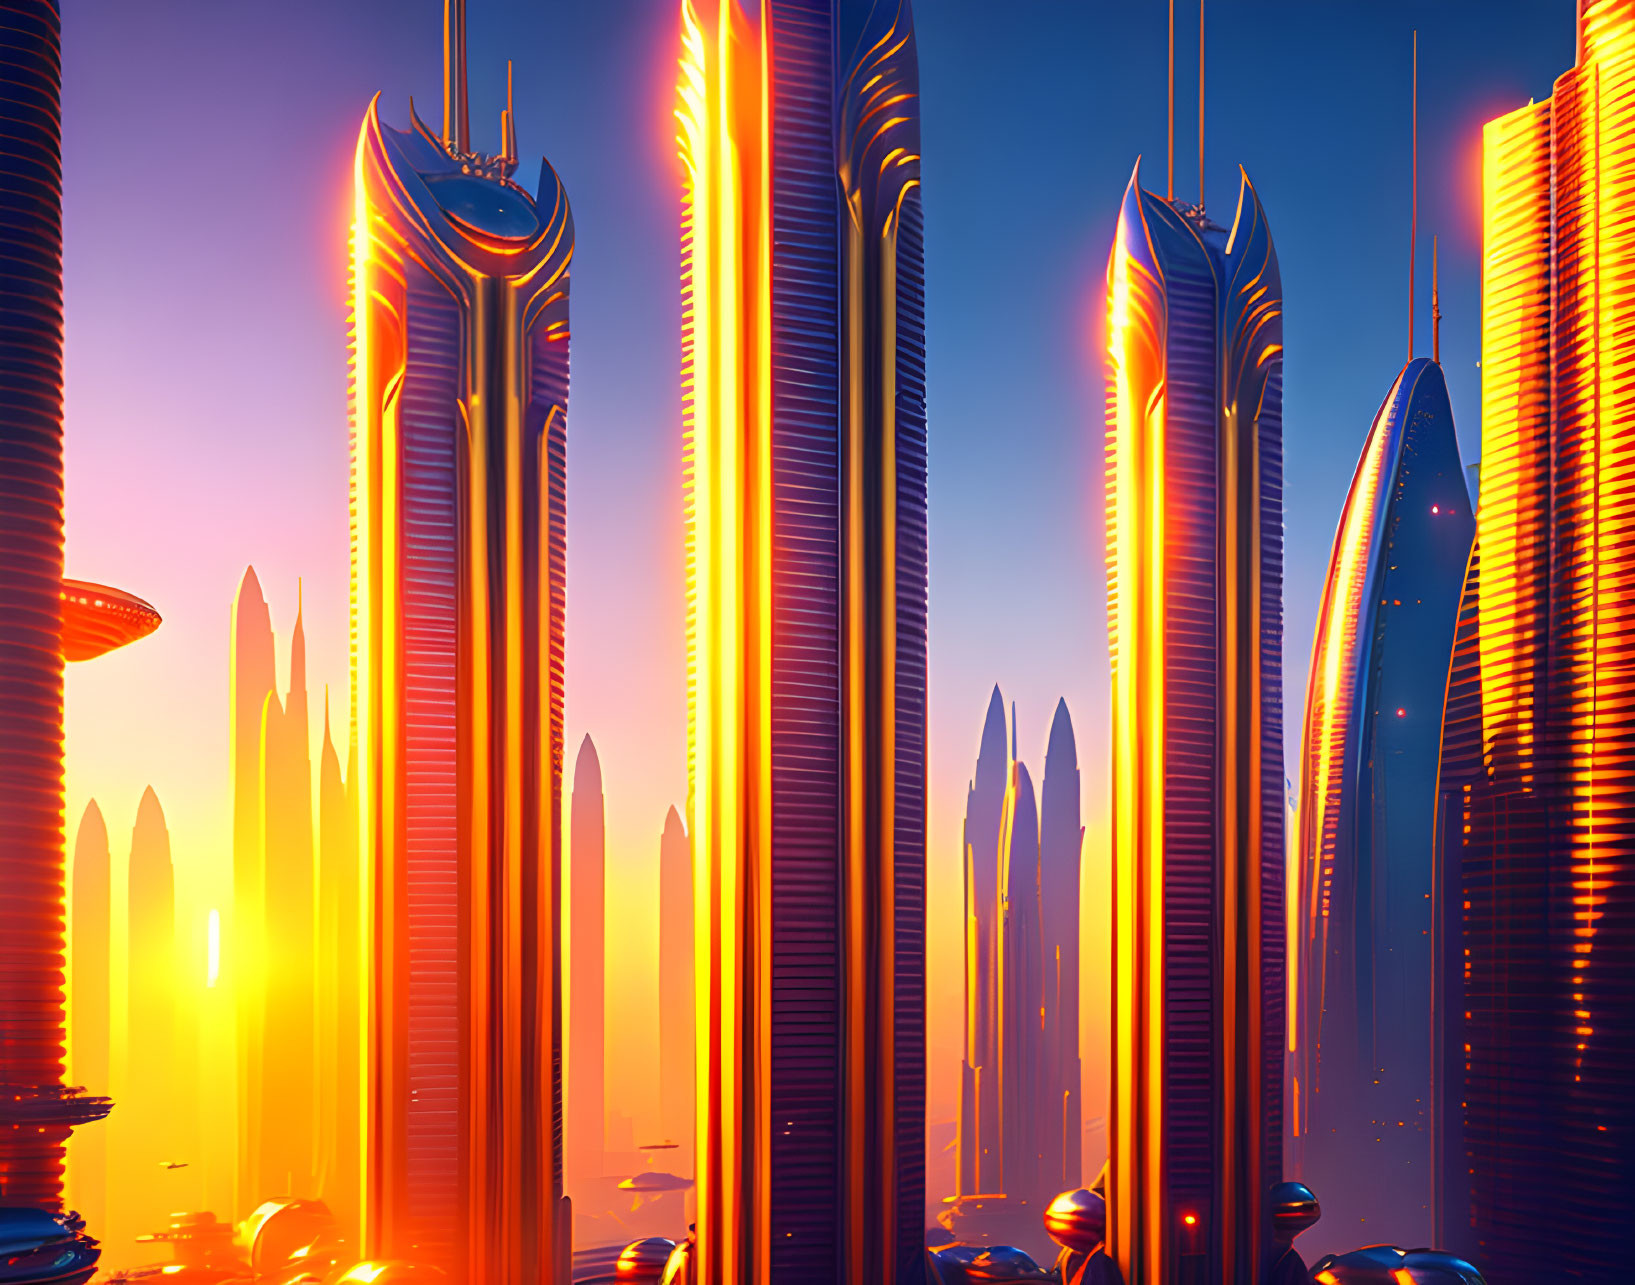 Futuristic city skyline with illuminated skyscrapers at sunset